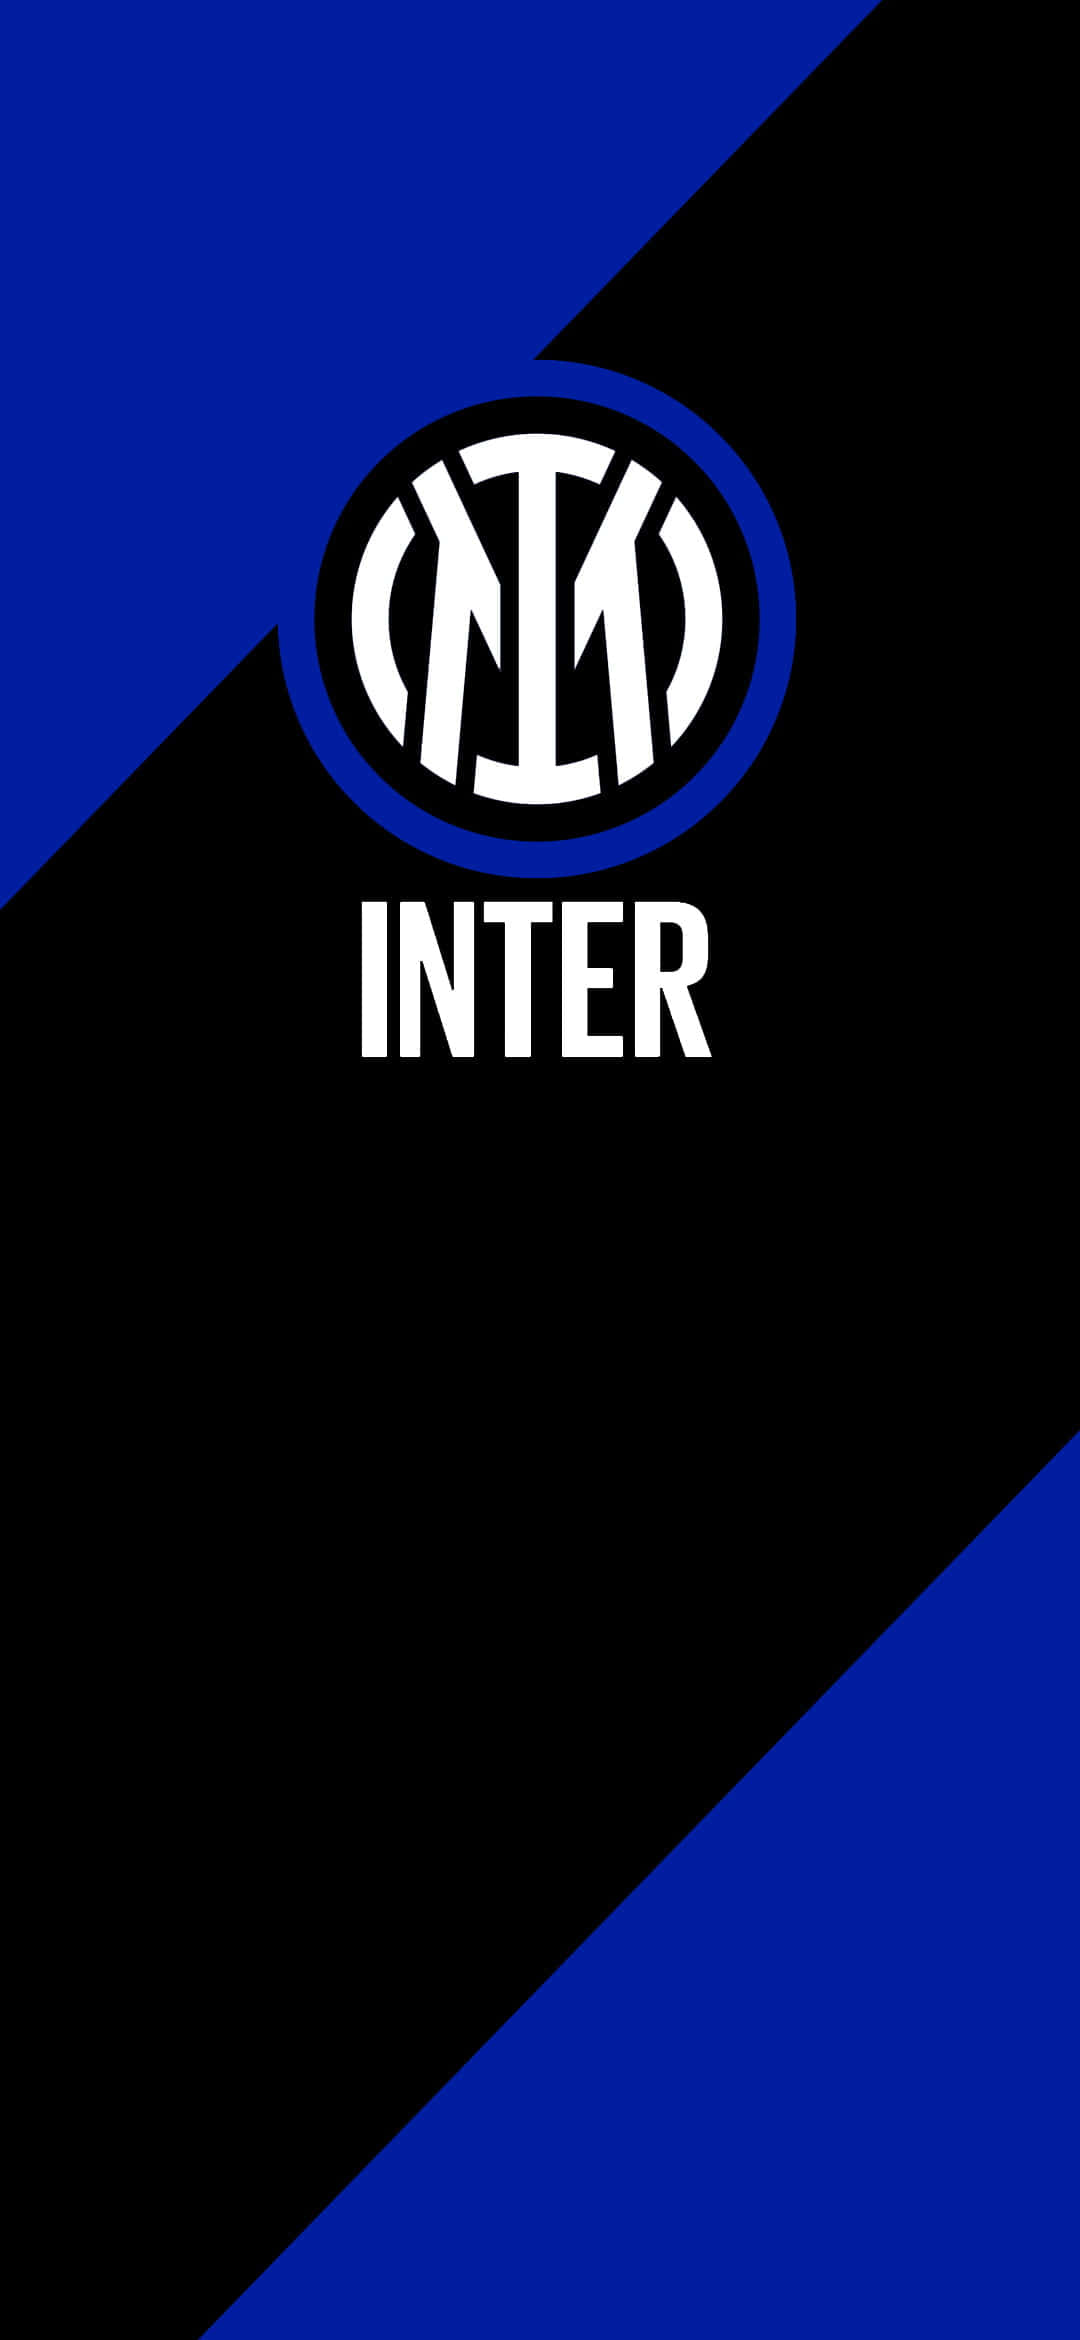 Inter Milan 20212022 Home Shirt Wallpaper  Immagini di calcio Foto di  calcio Inter milan